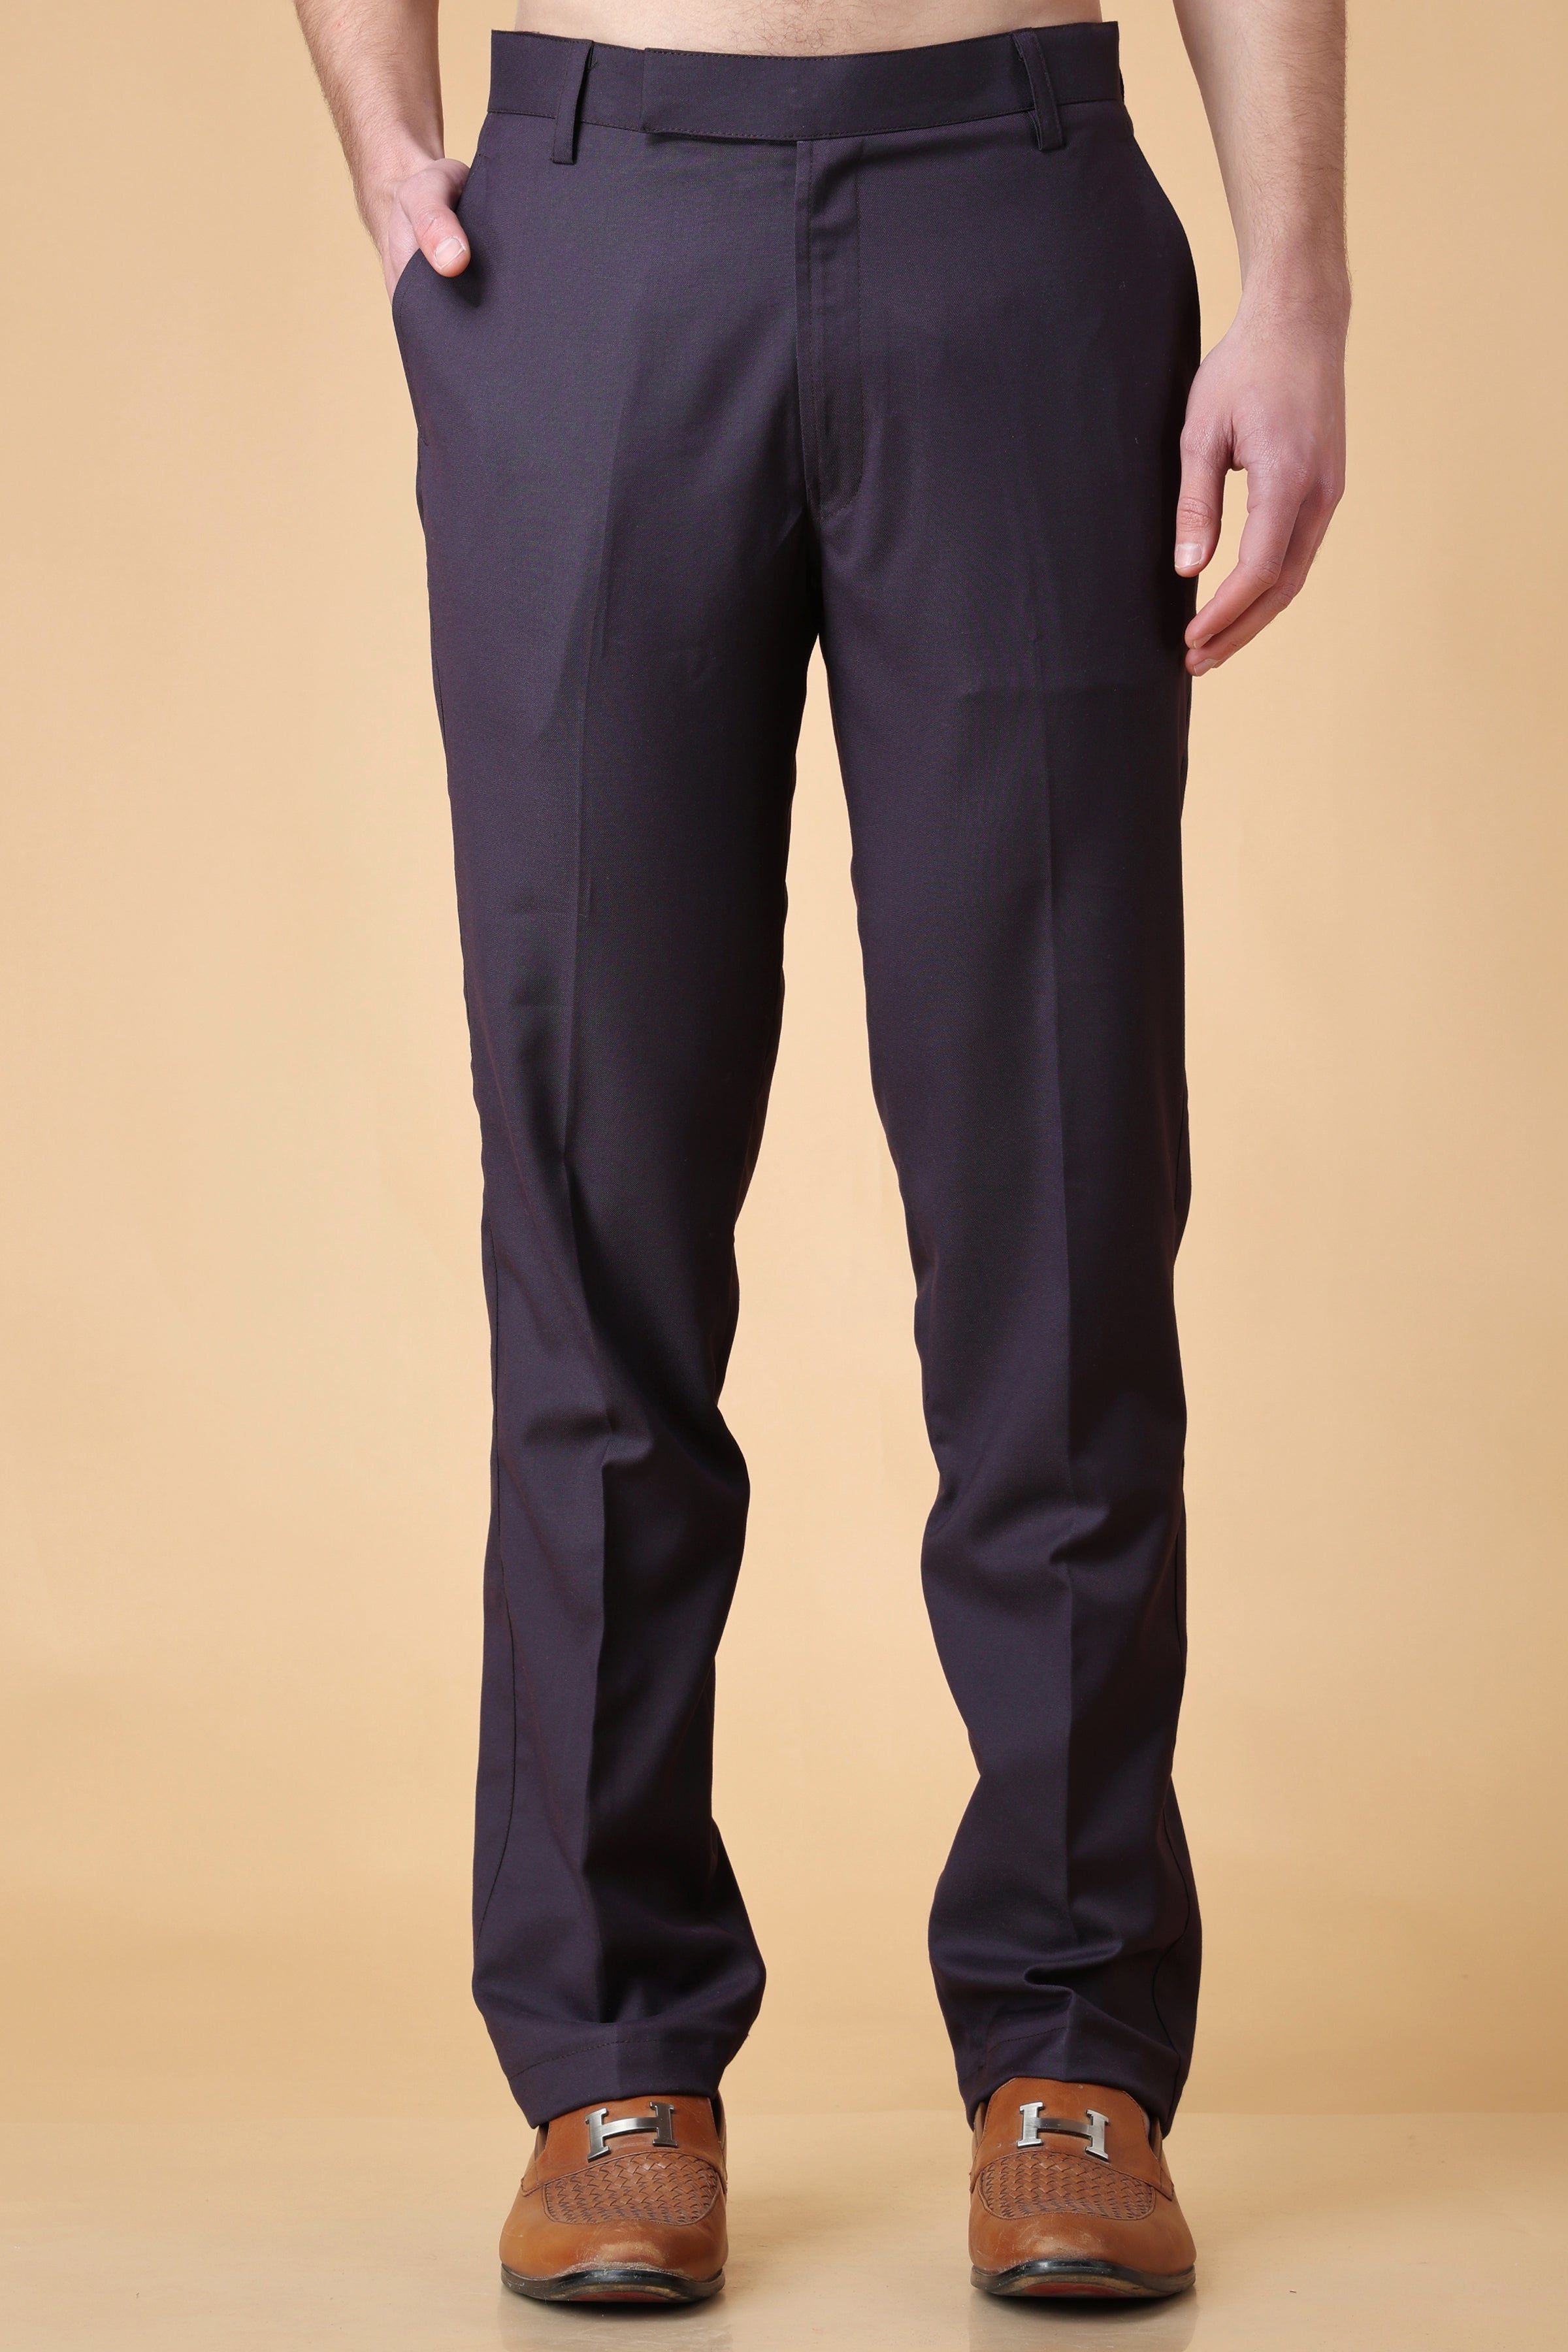 Buy Blue Grey Plaid Formal Pants For Men Online In India